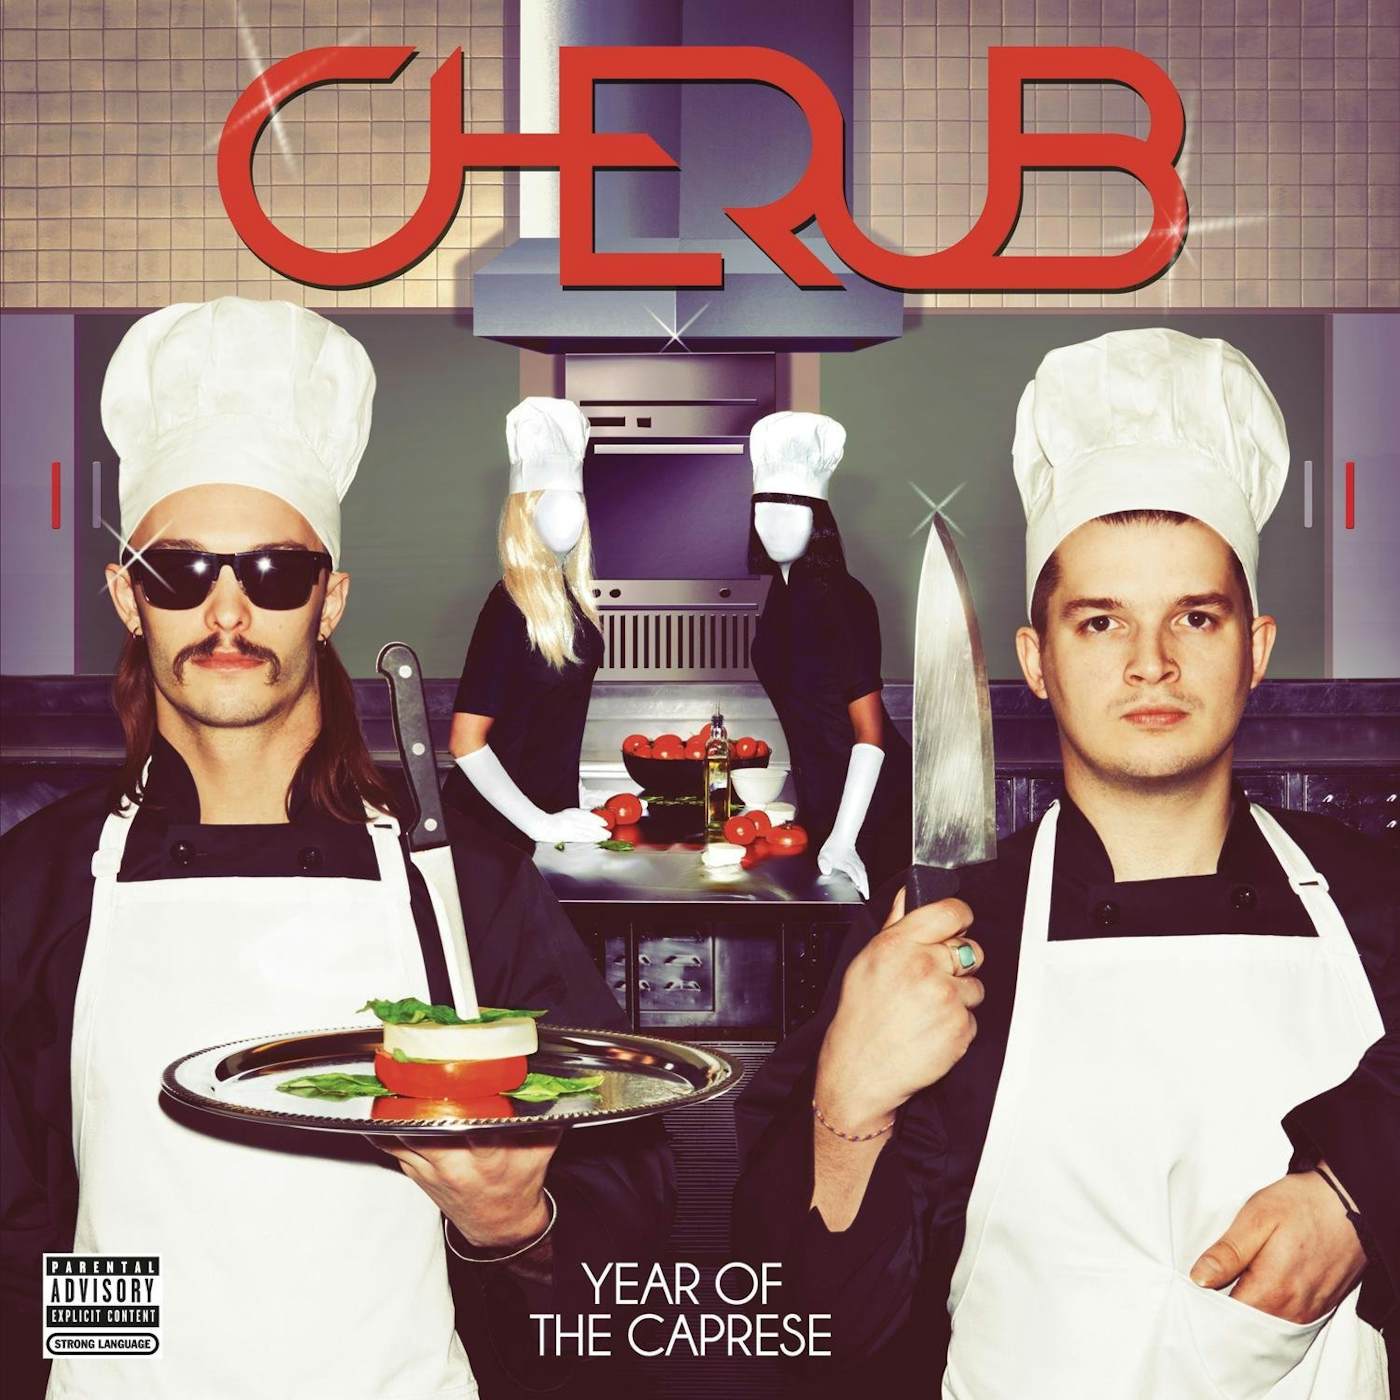 Cherub Year of the Caprese Vinyl Record